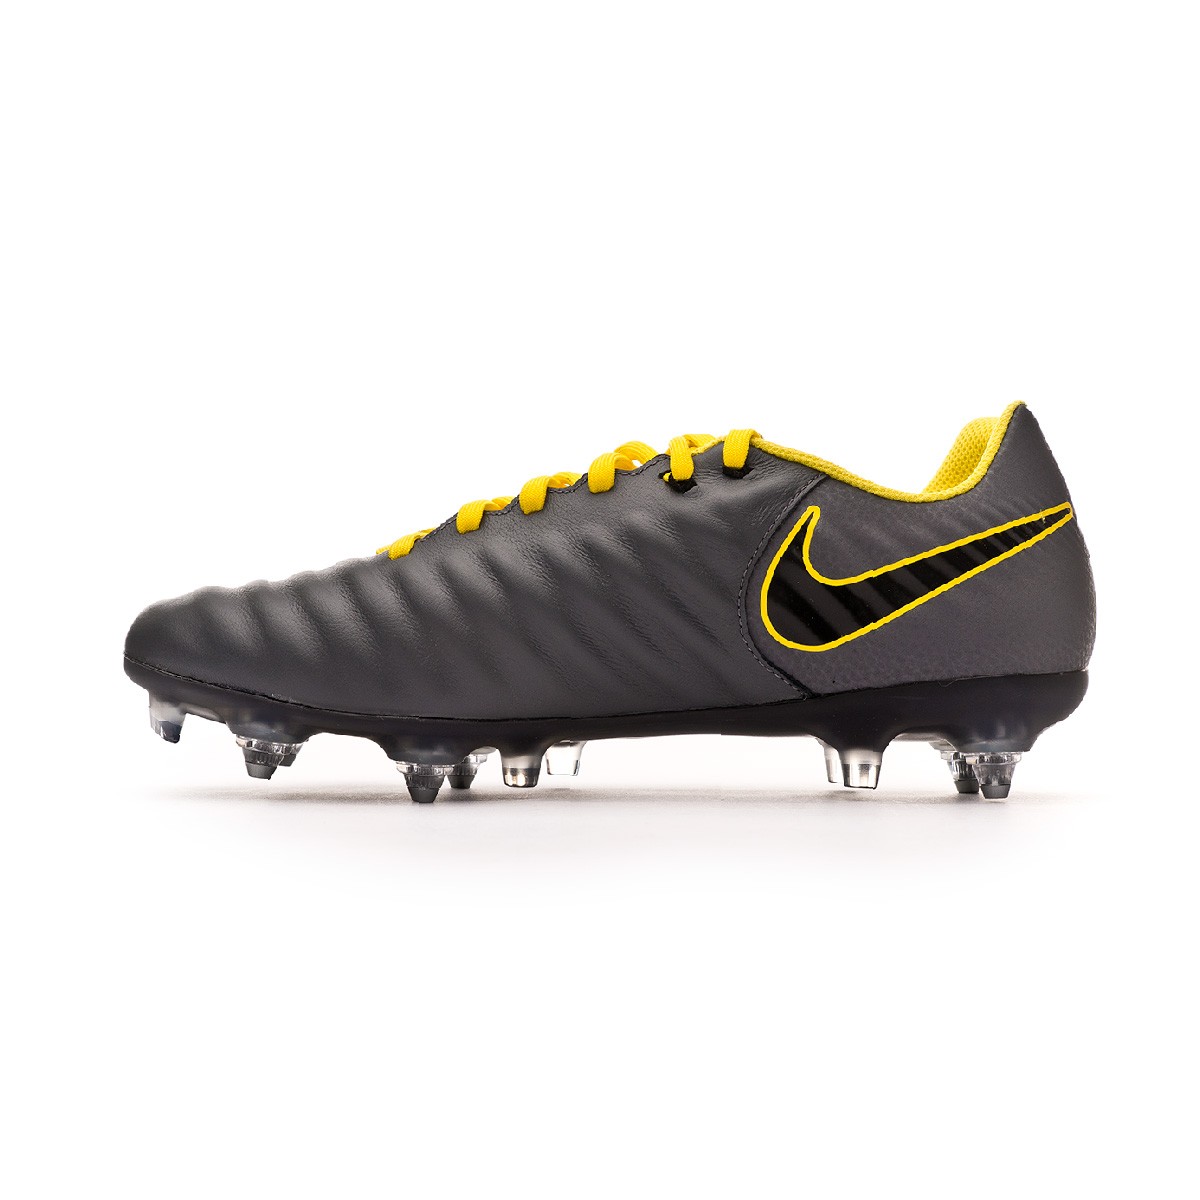 Football Boots Nike Tiempo Legend VII Academy SG-Pro ACC Dark  grey-Black-Optical yellow - Football store Fútbol Emotion